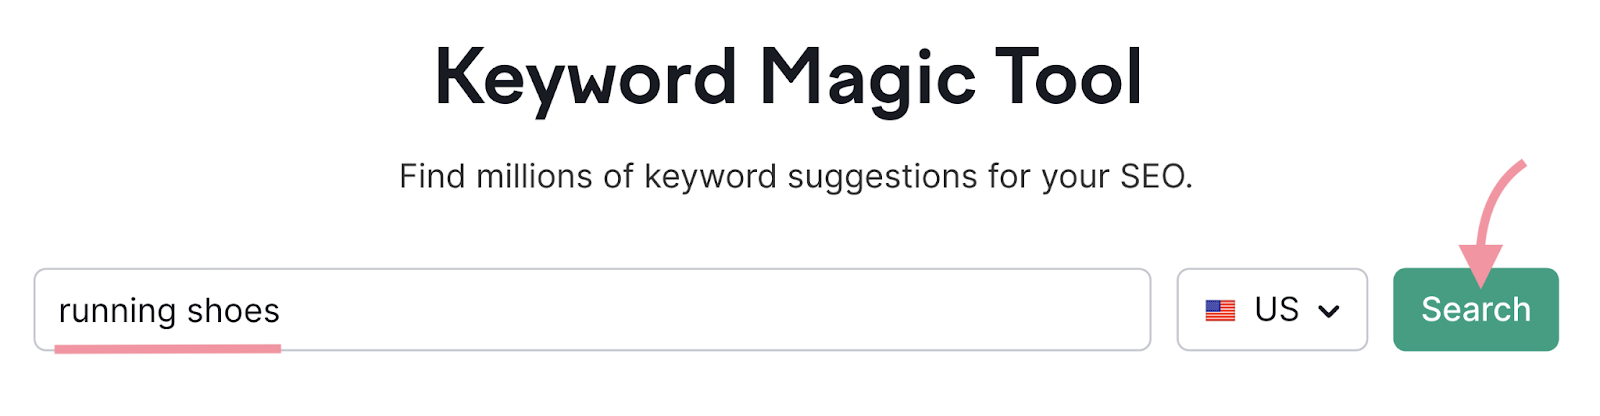 Keyword Magic Tool running shoes search